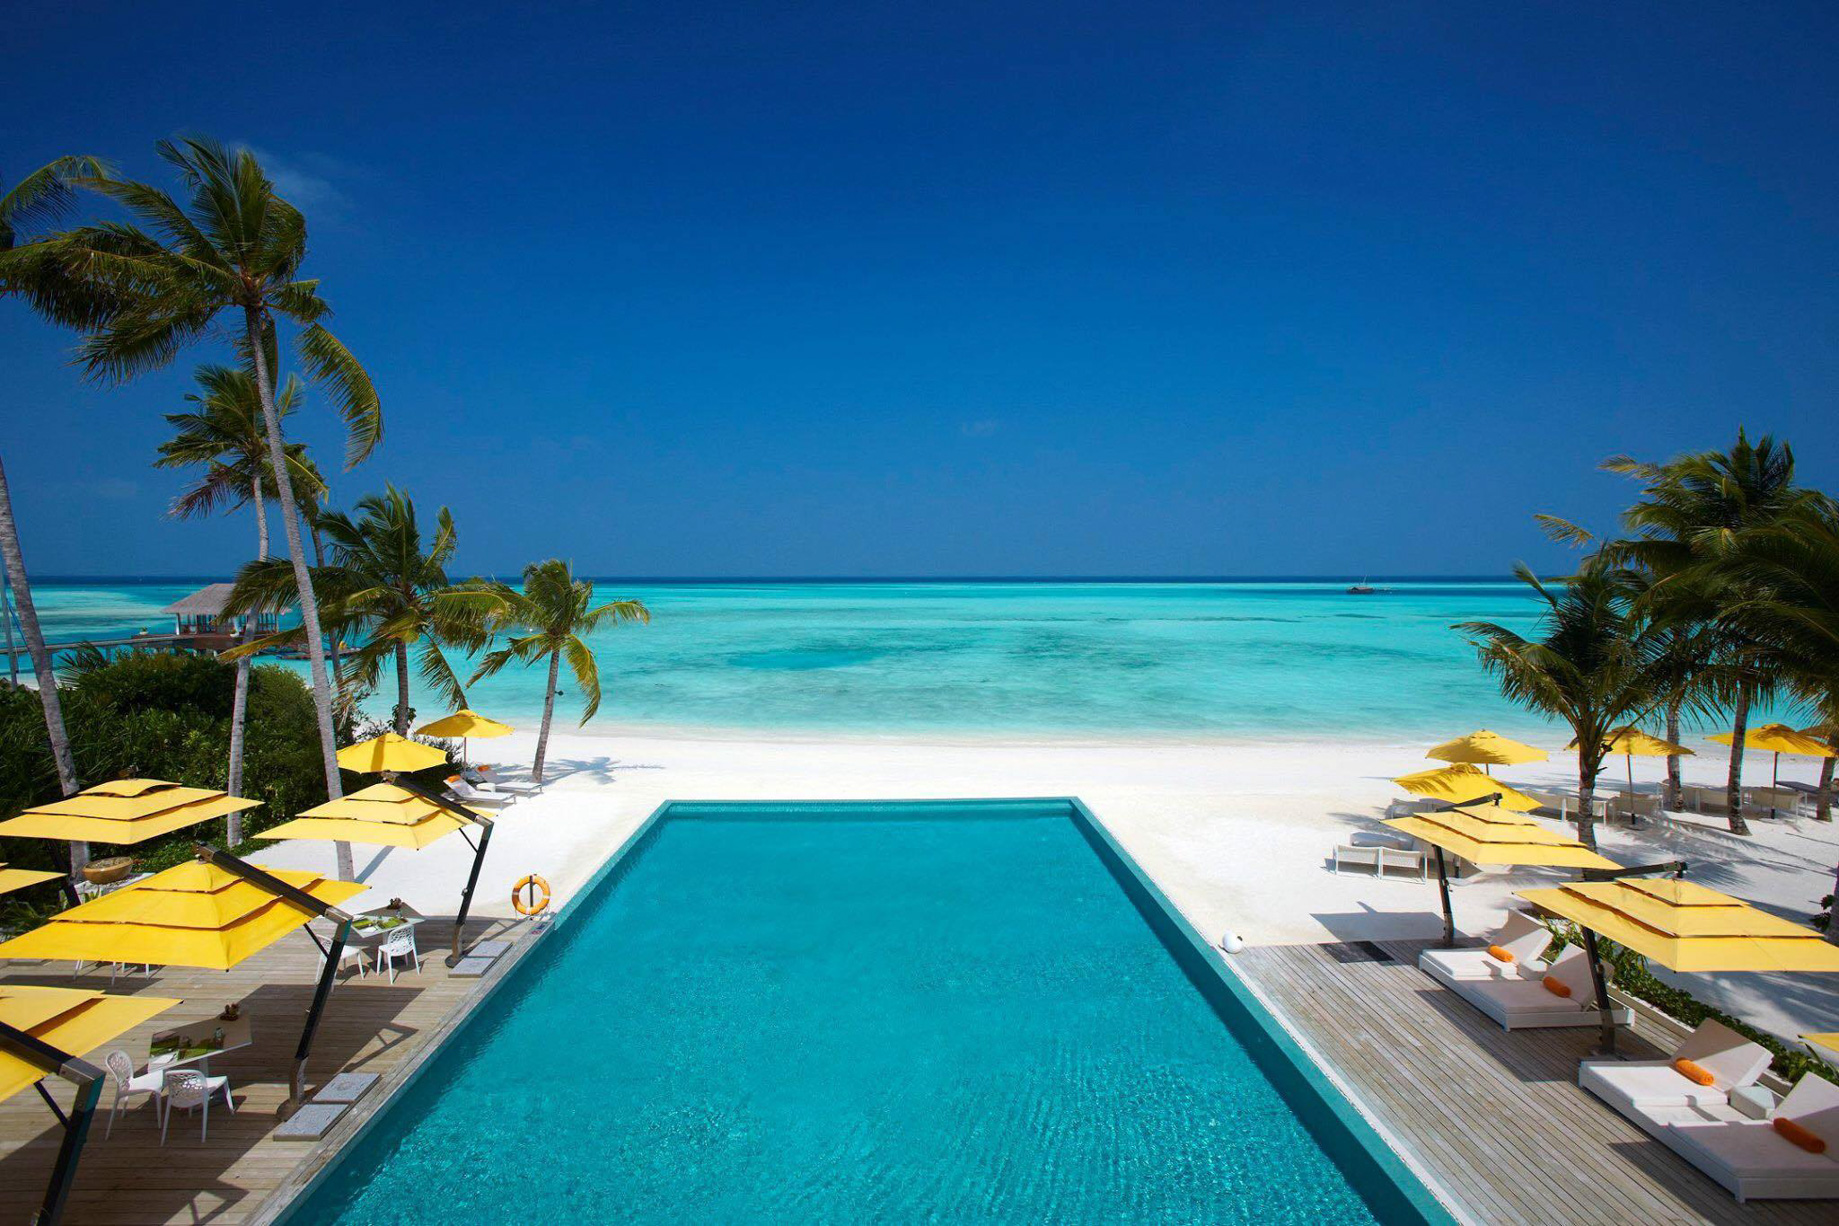 Niyama Private Islands Maldives Resort – Dhaalu Atoll, Maldives – Infinity Pool Deck Ocean View